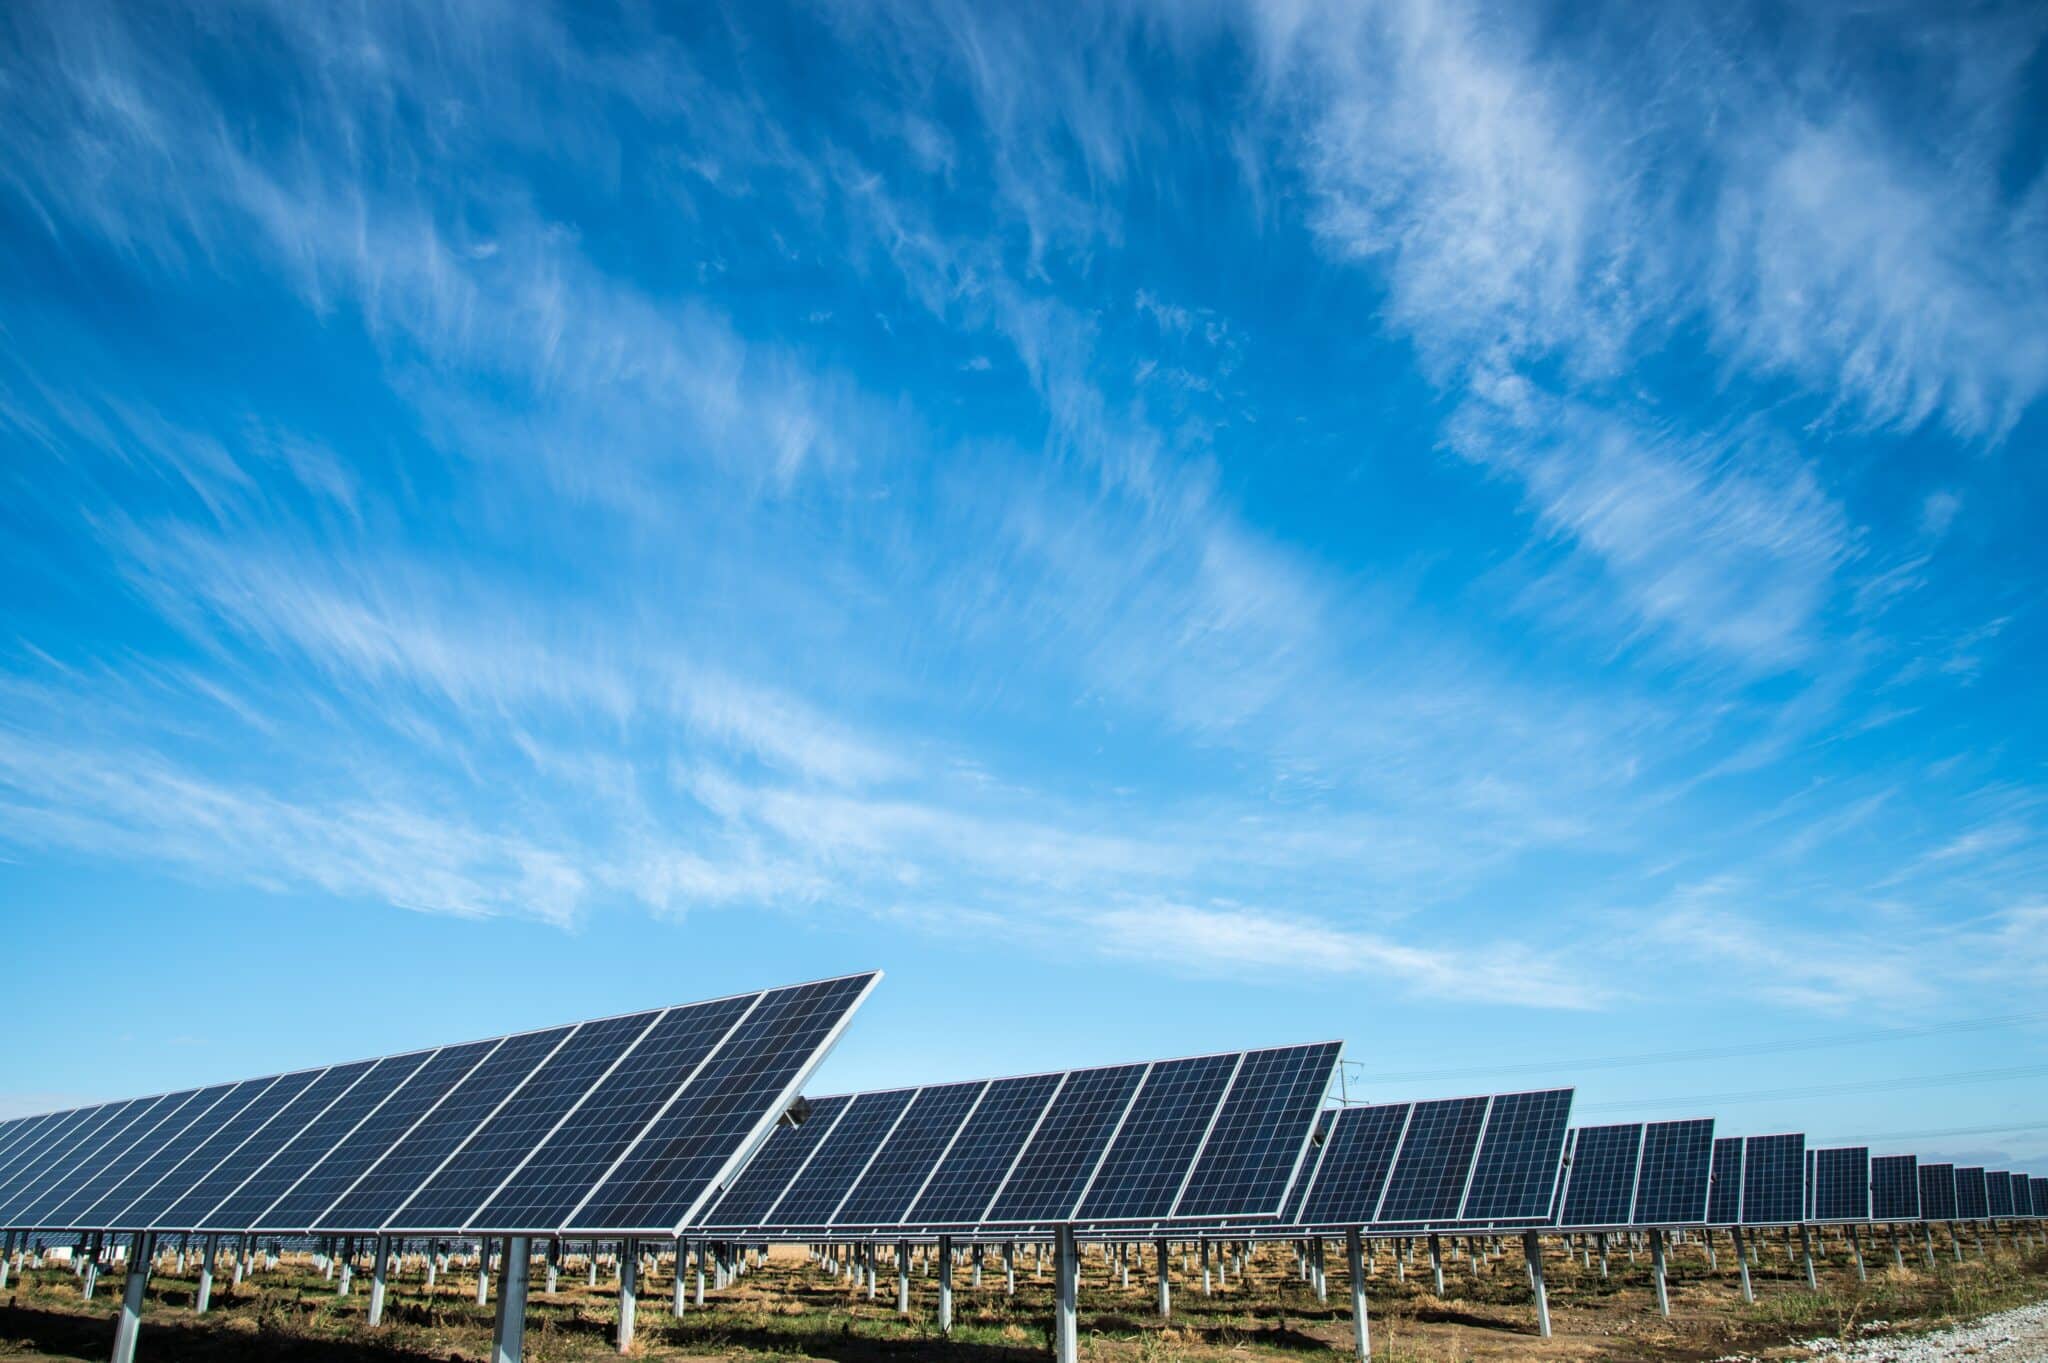 Large community solar farm harvesting energy